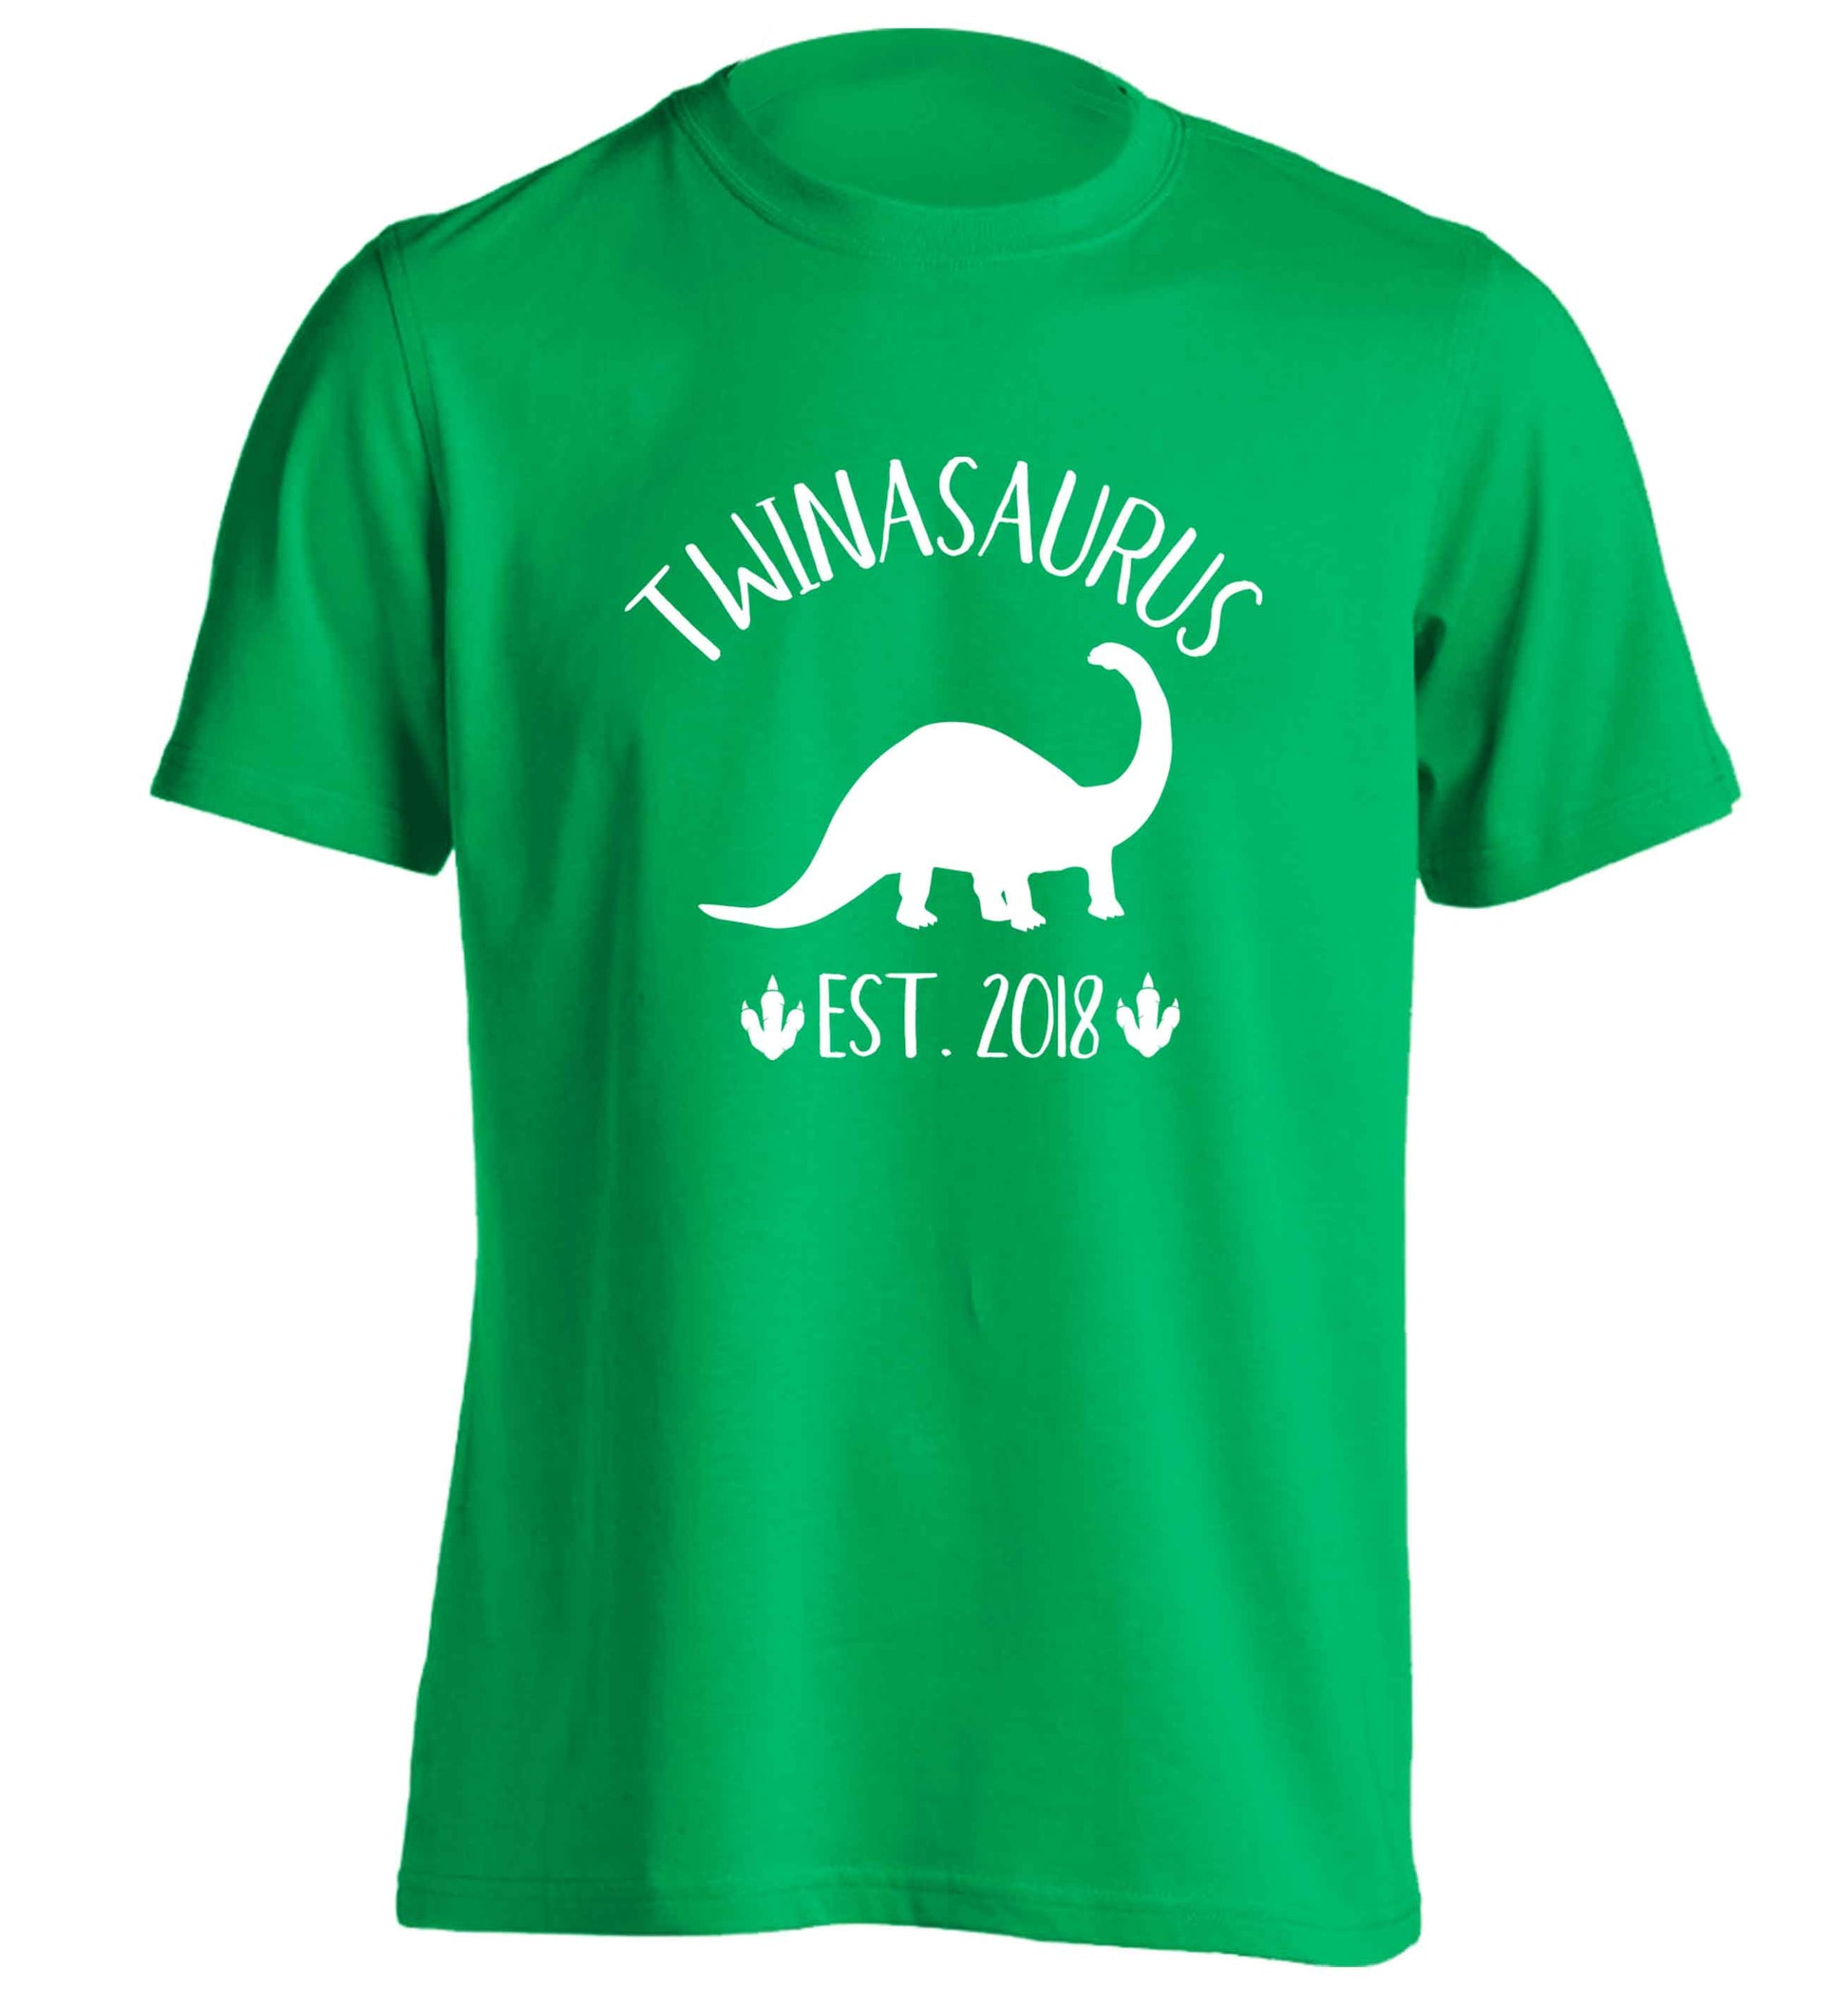 Personalised twinasaurus since (custom date) adults unisex green Tshirt 2XL